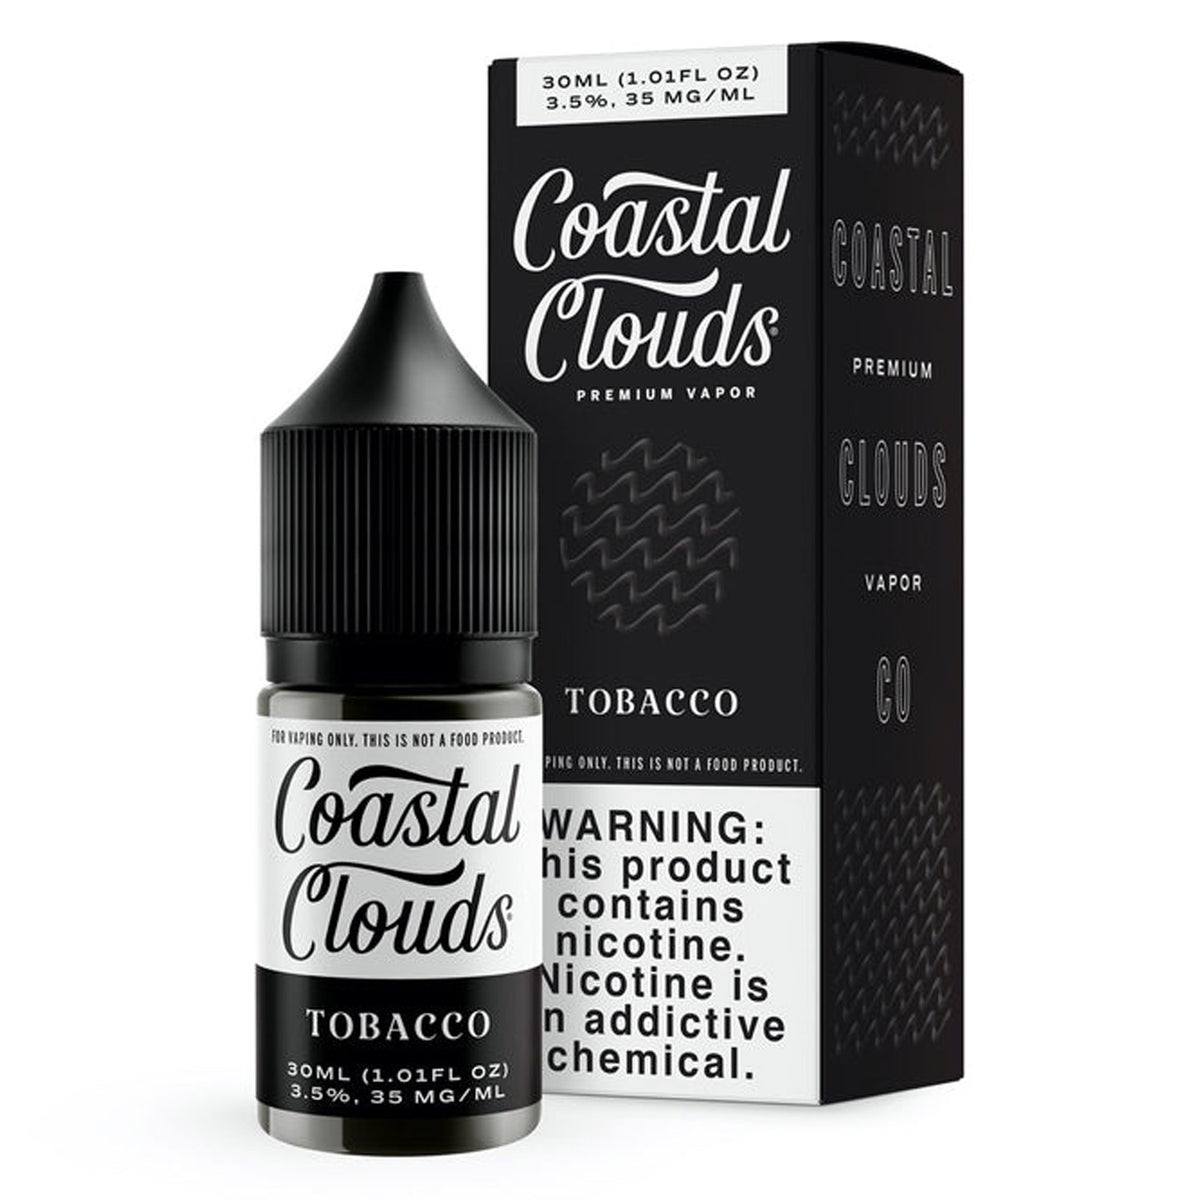 Coastal Clouds 30mL Tobacco